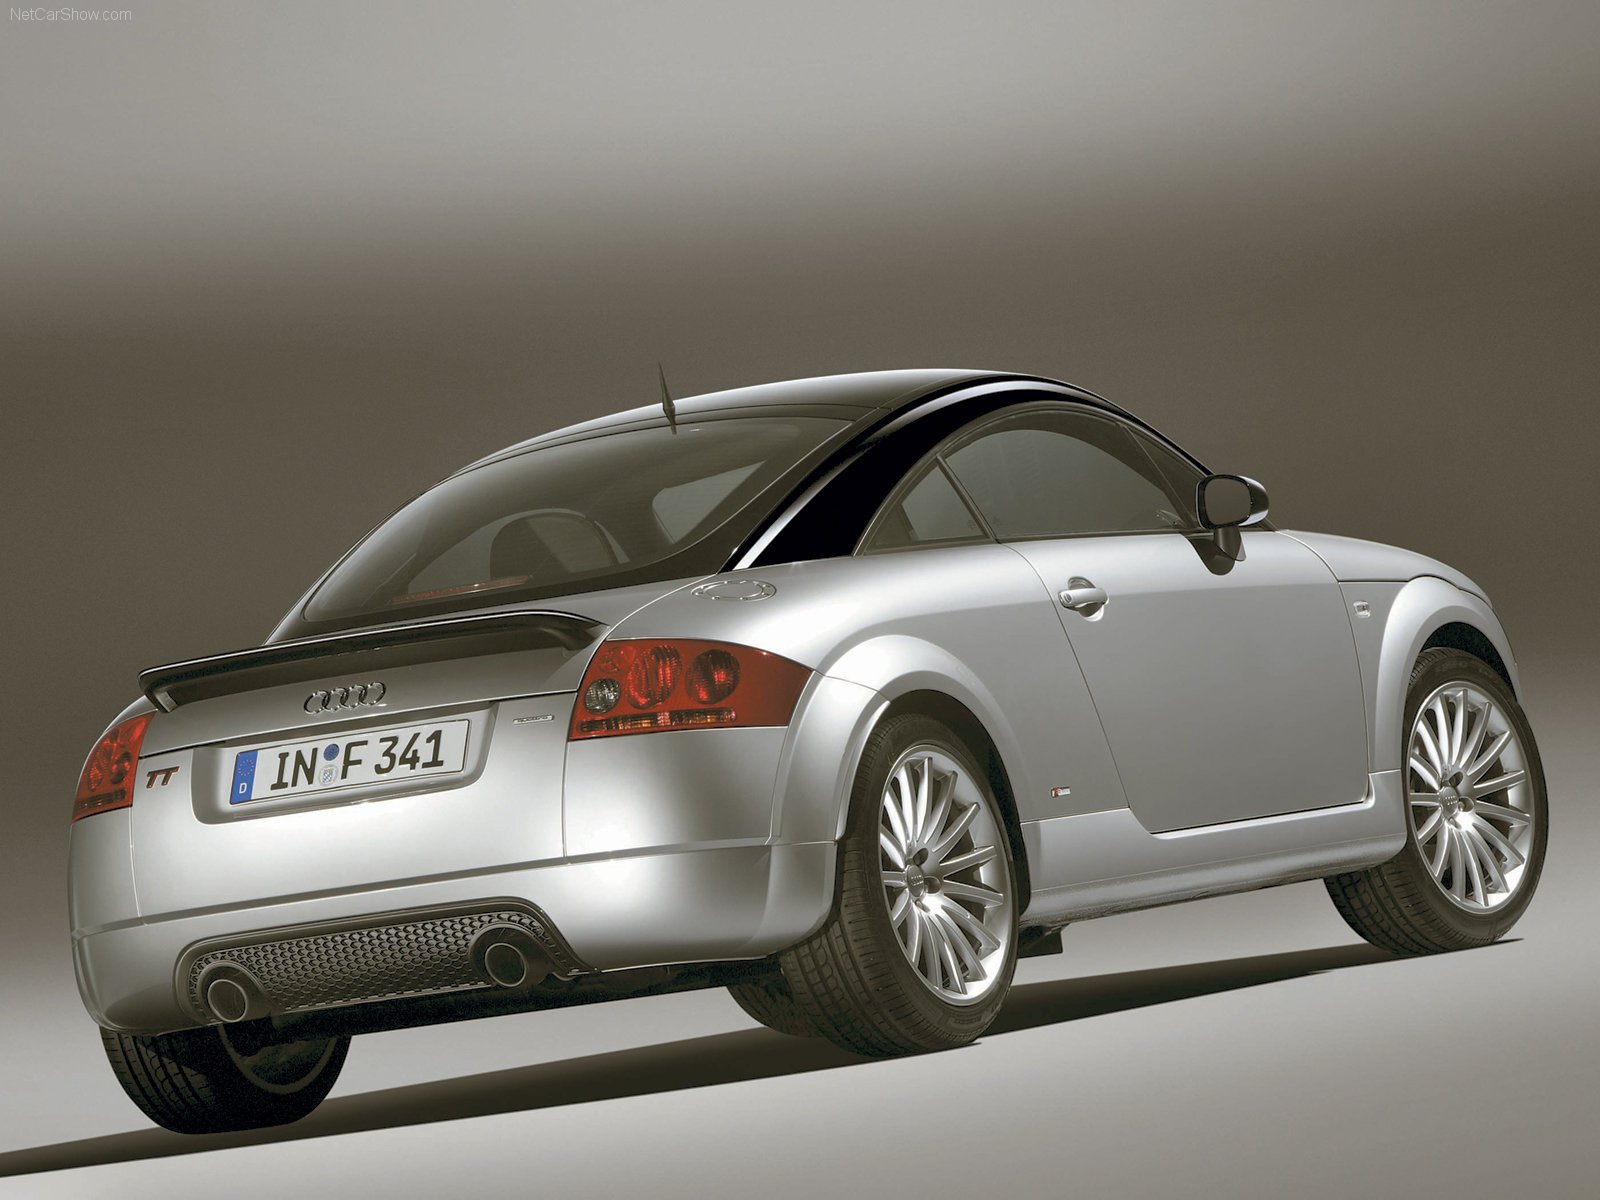 Audi Tt Quattro Sport Coupe 2005 Wallpapers Hd Desktop And